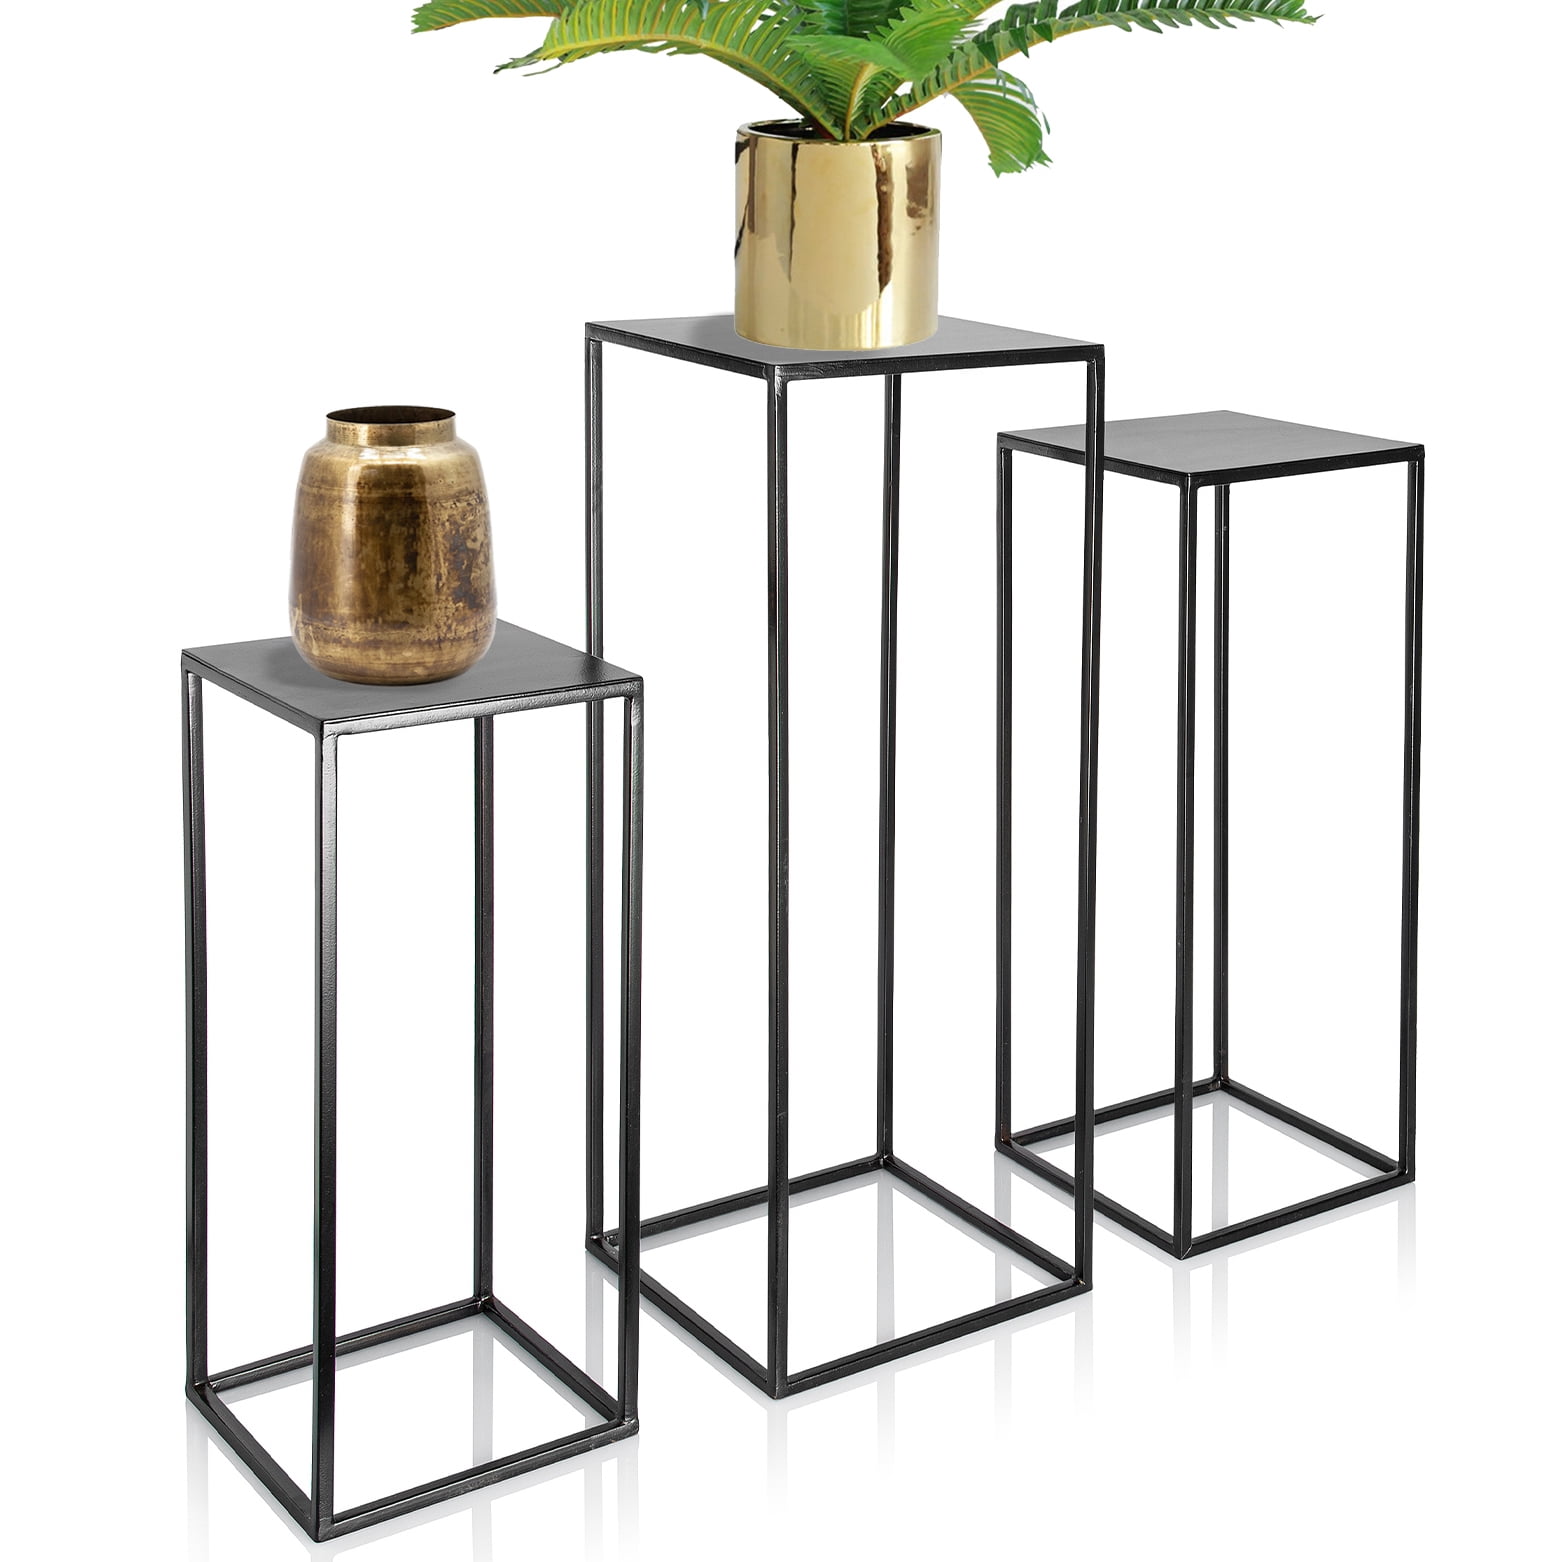  WEENINE 37 Tall Metal Plant Stand, 2 Tier Plant Tables Modern  Square Corner Flower Plant Display Pedestal Stands Holder for Indoor  Outdoor (37-Black) : Patio, Lawn & Garden